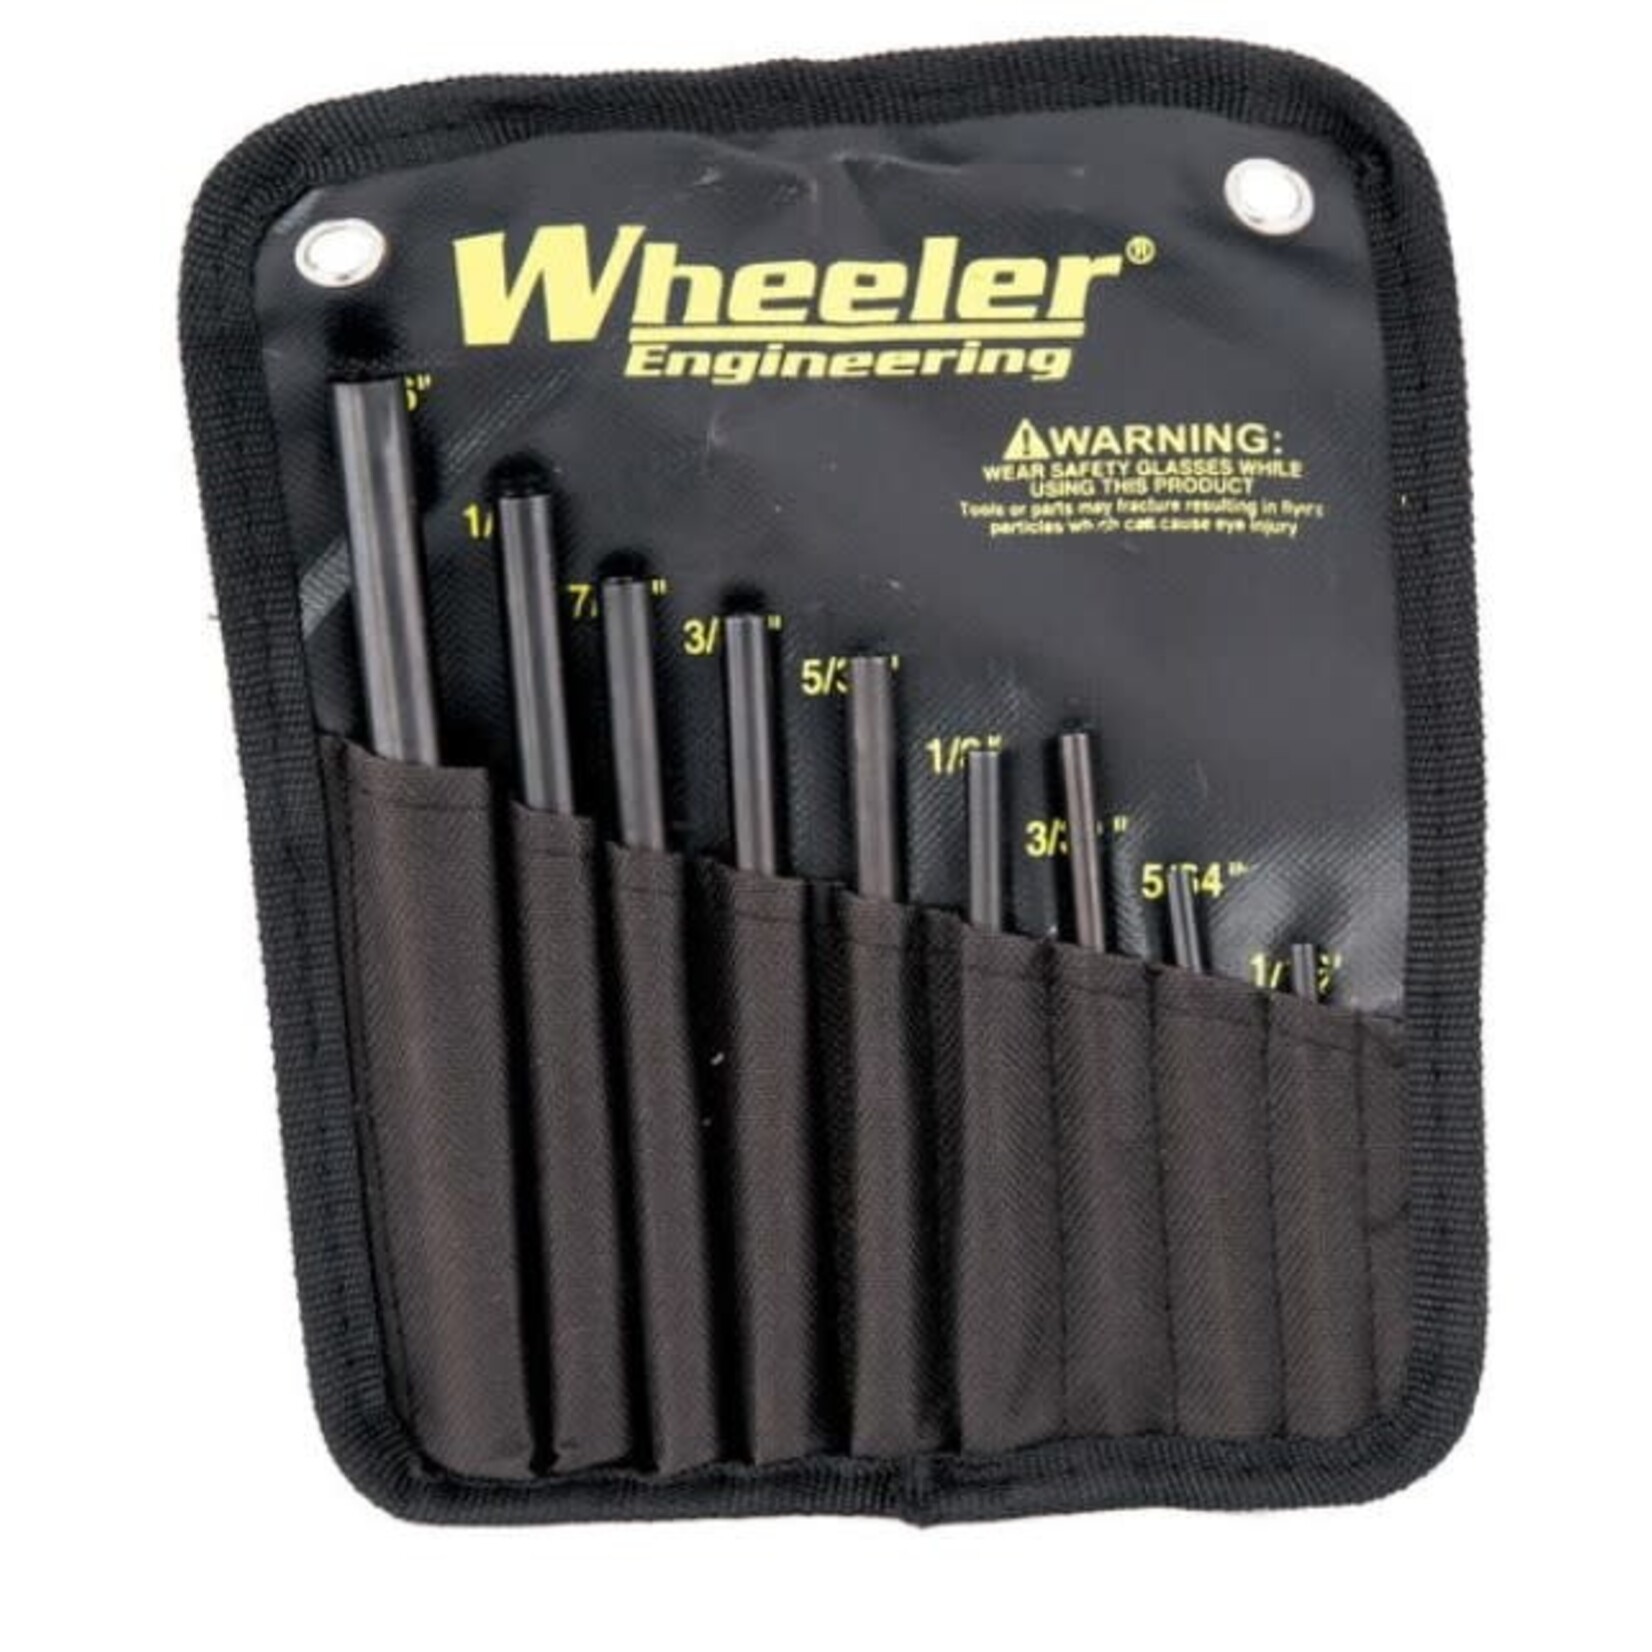 Wheeler Engineering 9 Piece Roll Pin Starter Set